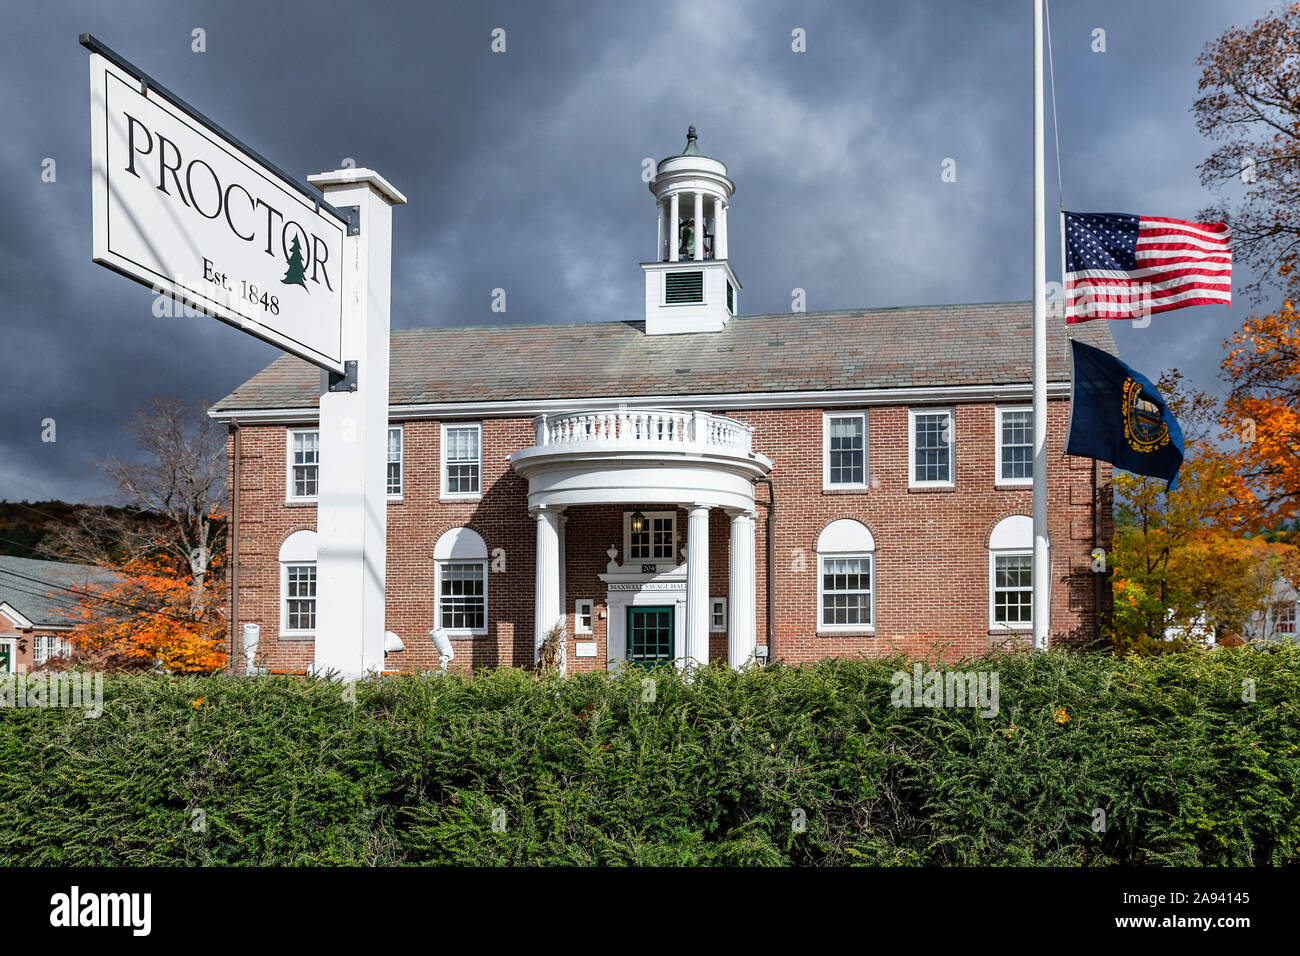 Proctor vorbereitende Schule, Salisbury, New Hampshire, USA. Stockfoto